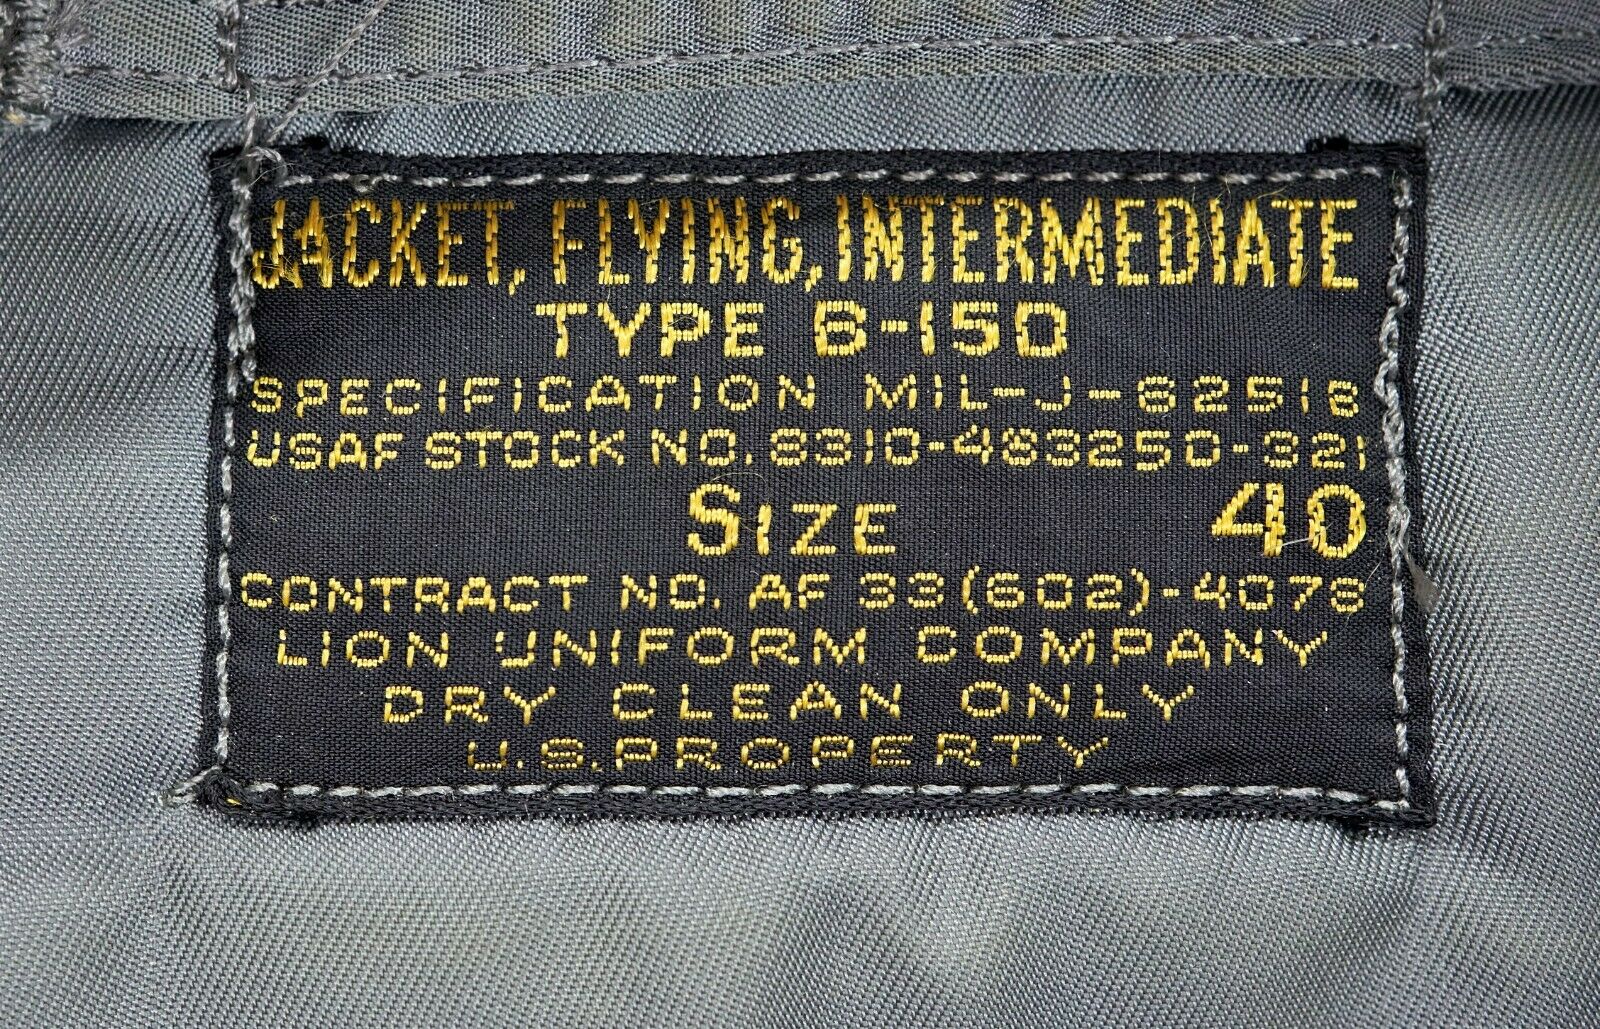 Original B-15D purchase (modified?) | Vintage Leather Jackets Forum